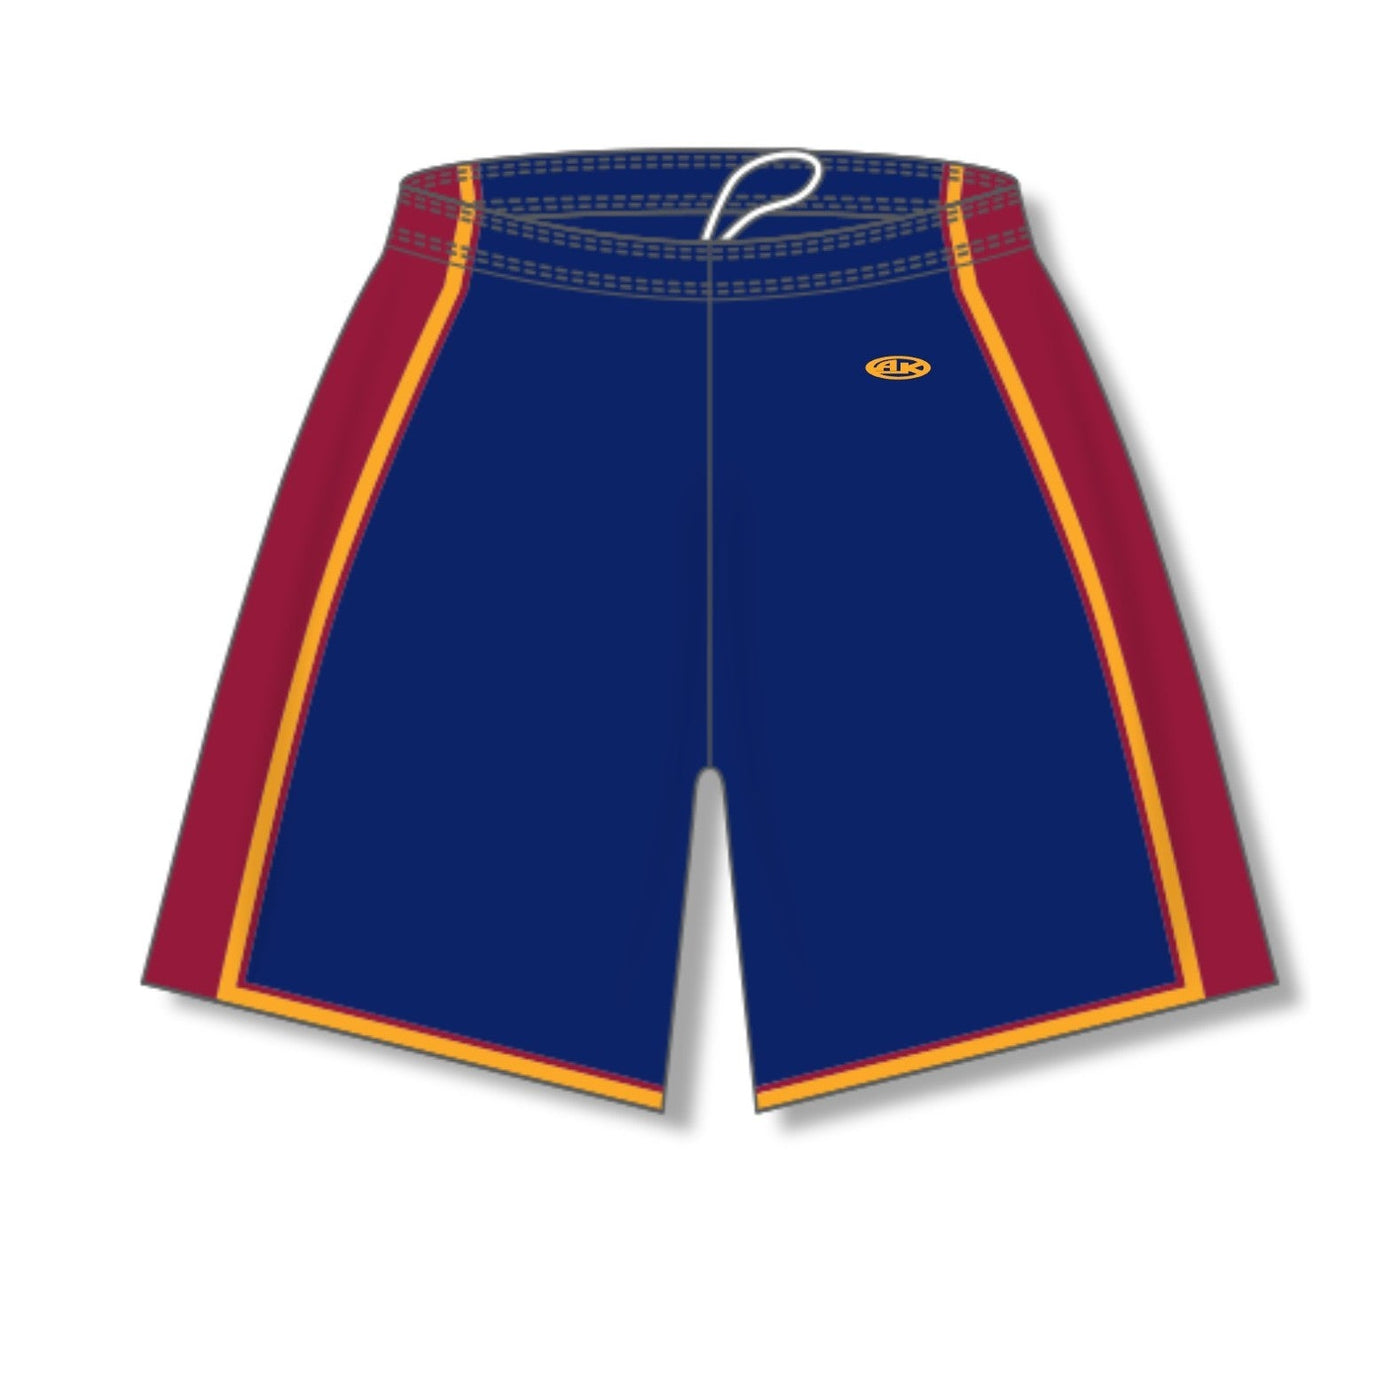 Dry-Flex Pro Style Basketball Shorts-Navy-Maroon-Gold